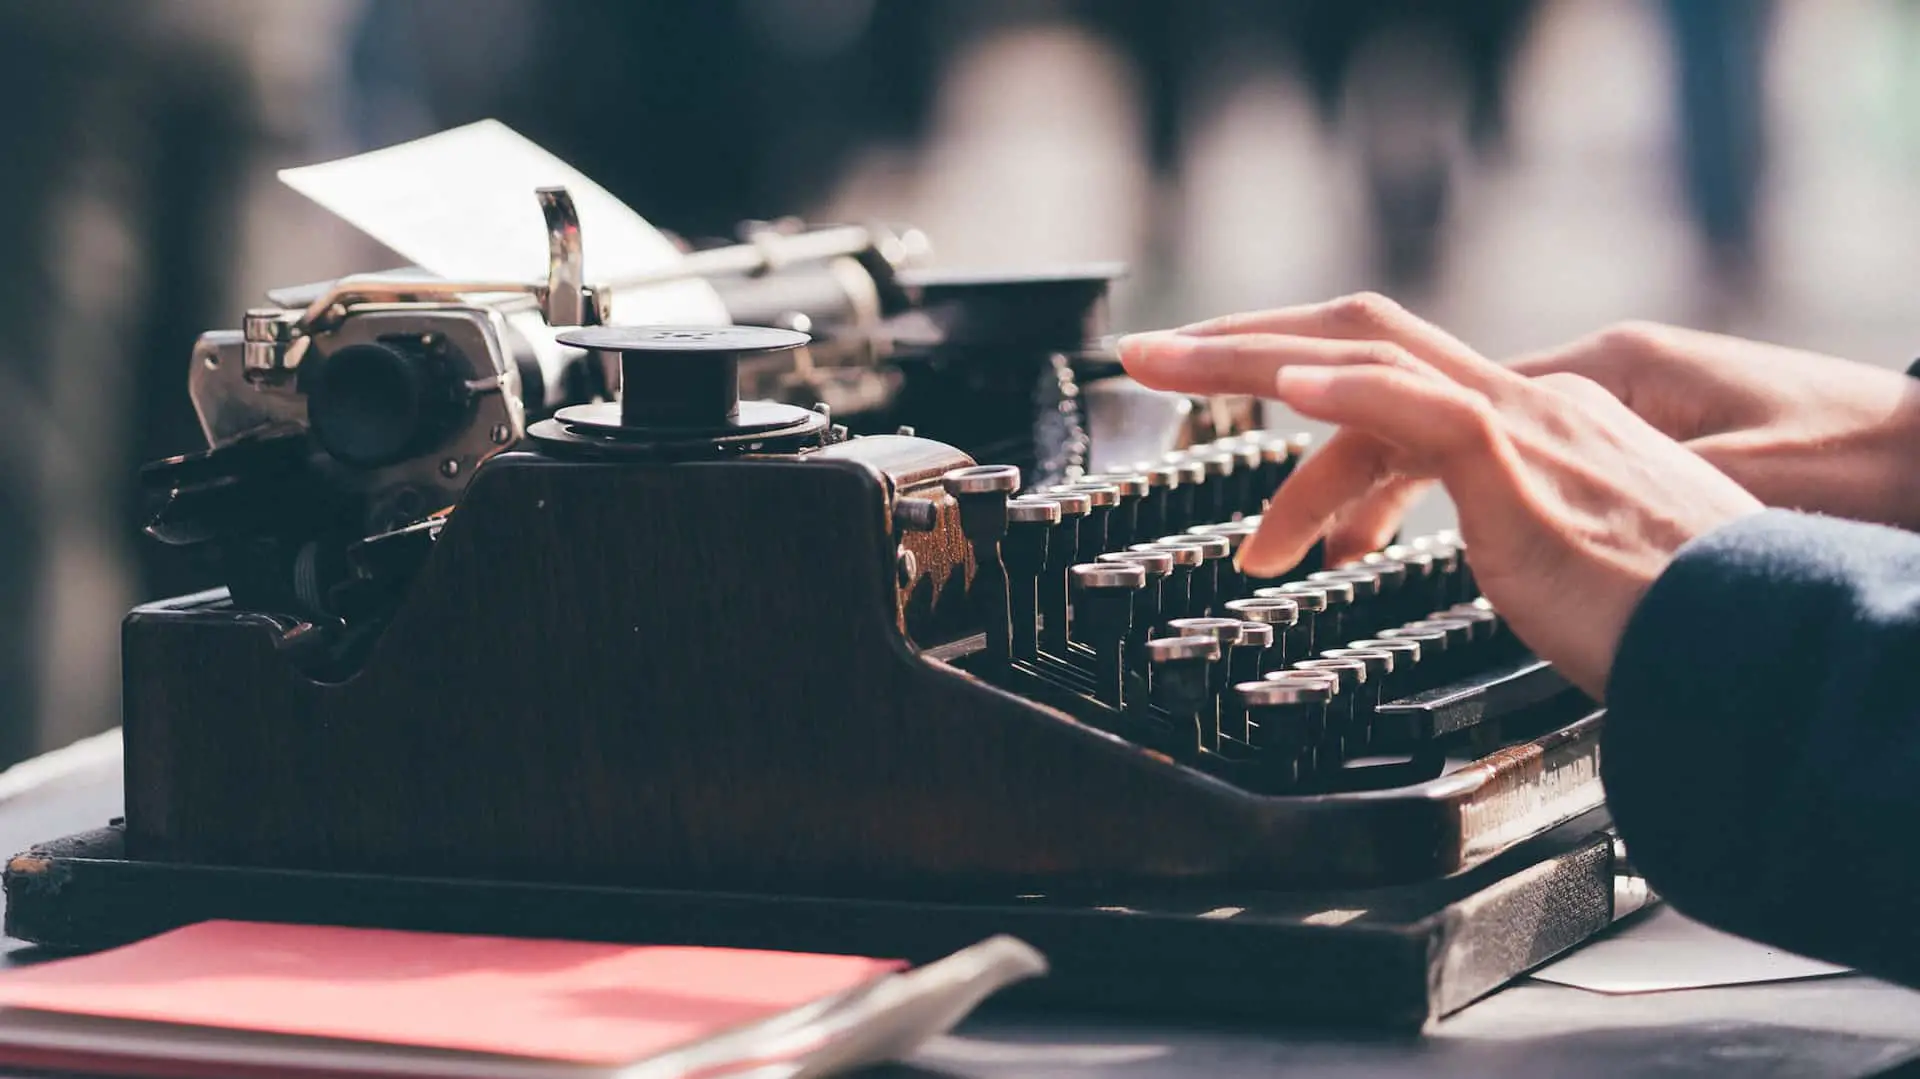 person typing on a vintage typewriter